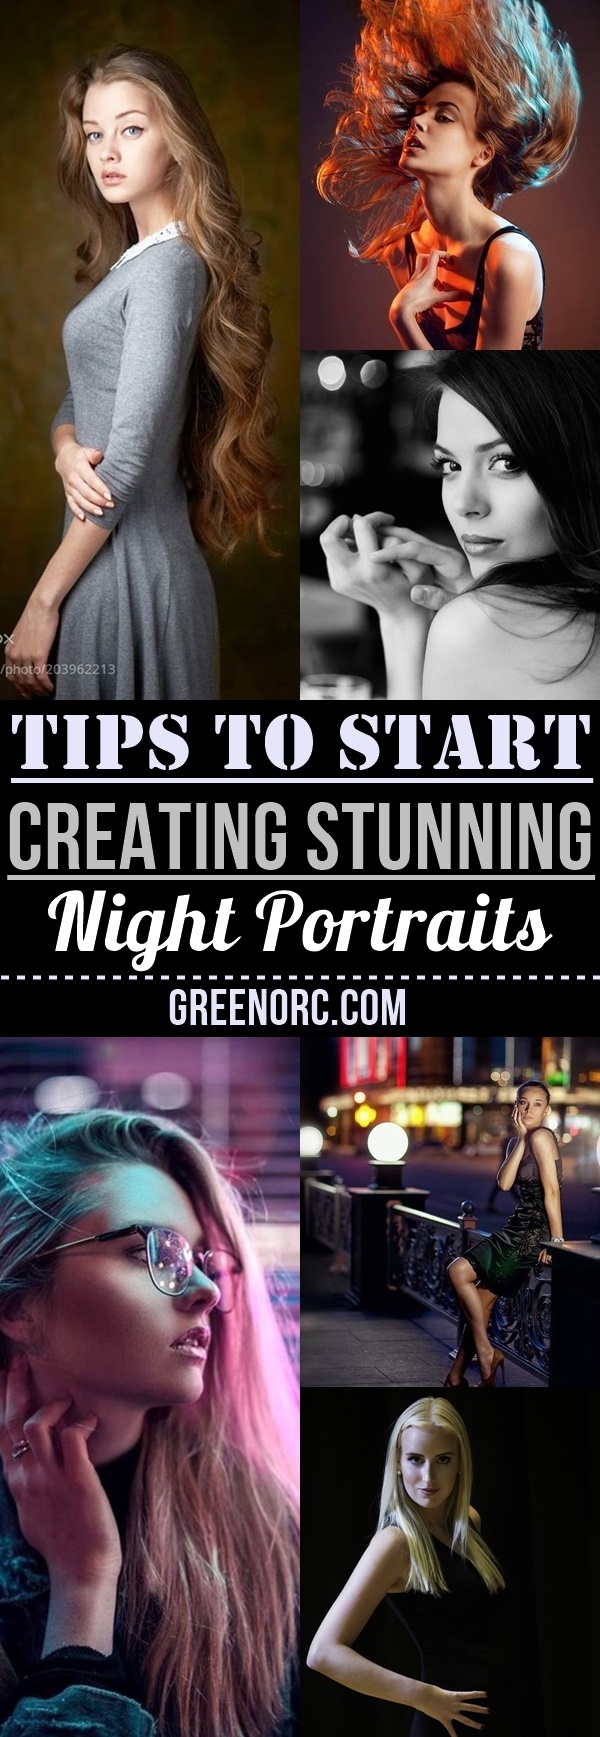 Tips to Start Creating Stunning Night Portraits